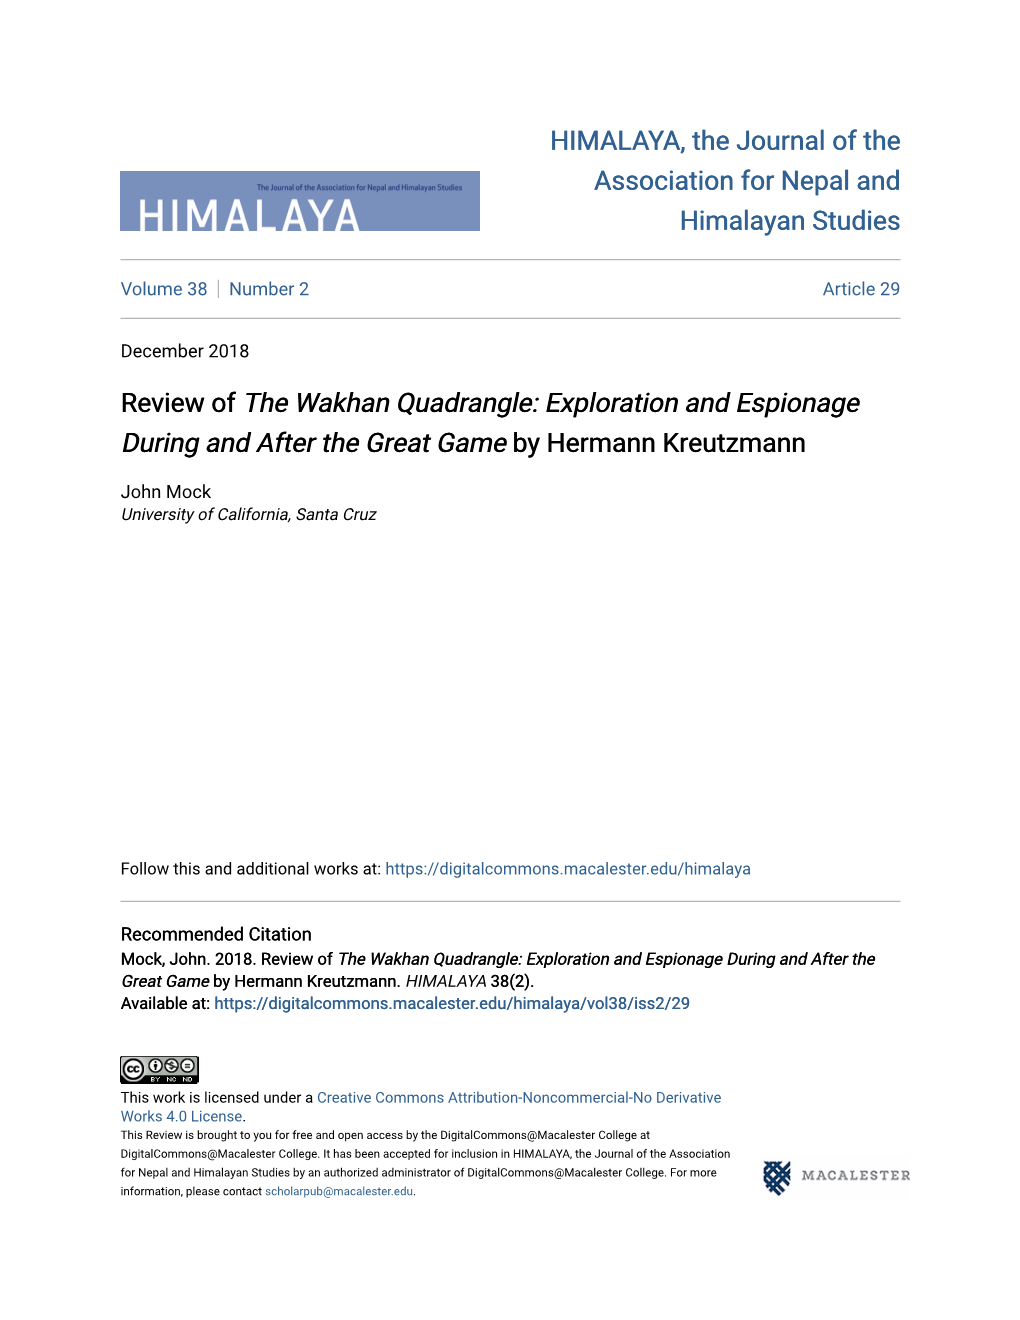 &lt;I&gt;The Wakhan Quadrangle: Exploration and Espionage During